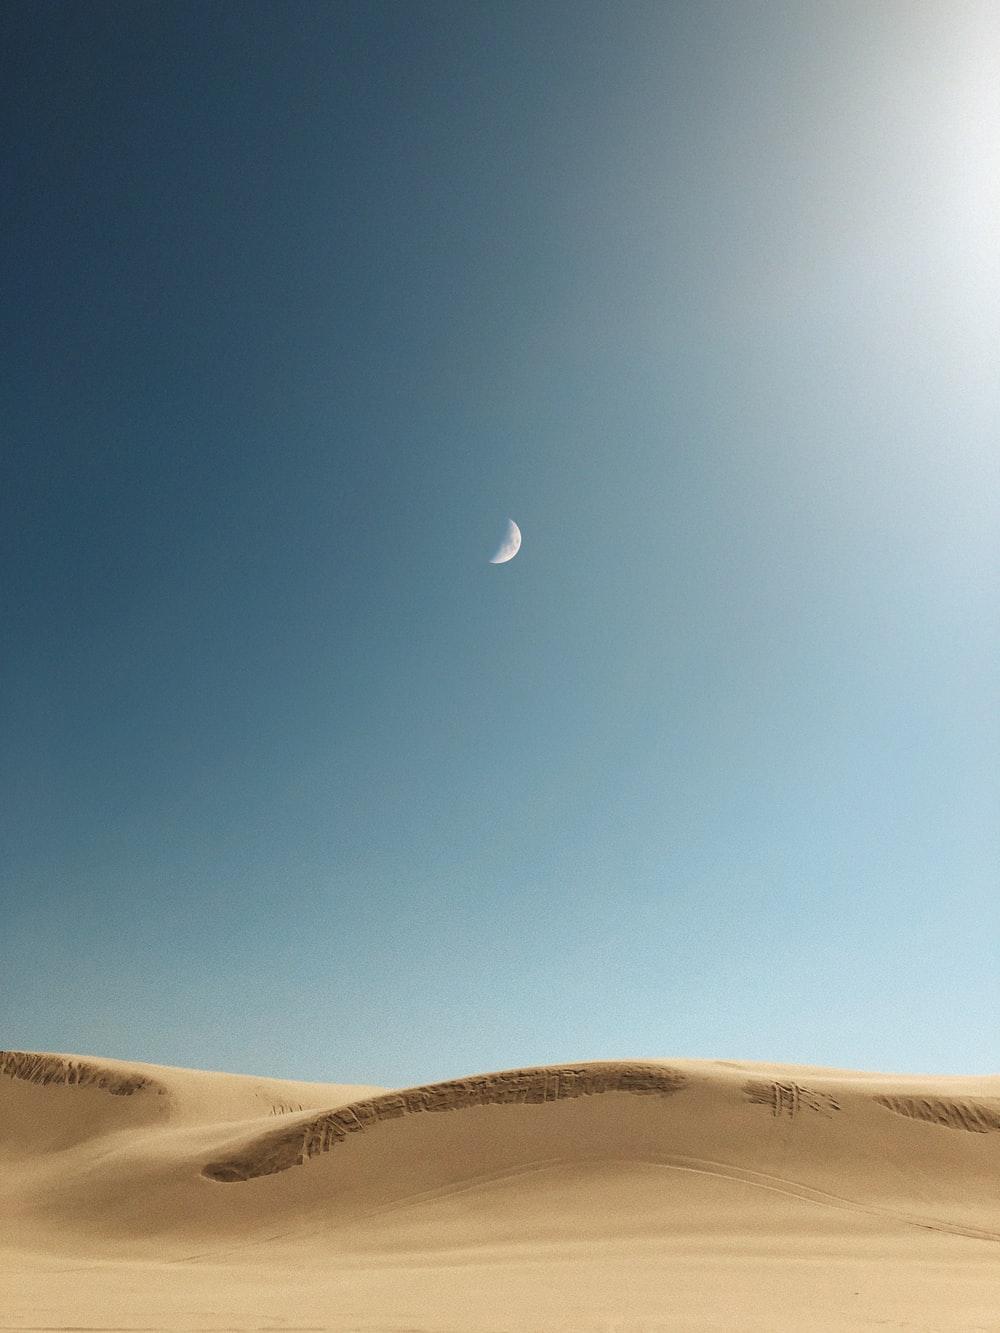 Nature, desert, landscape and dune. HD photo